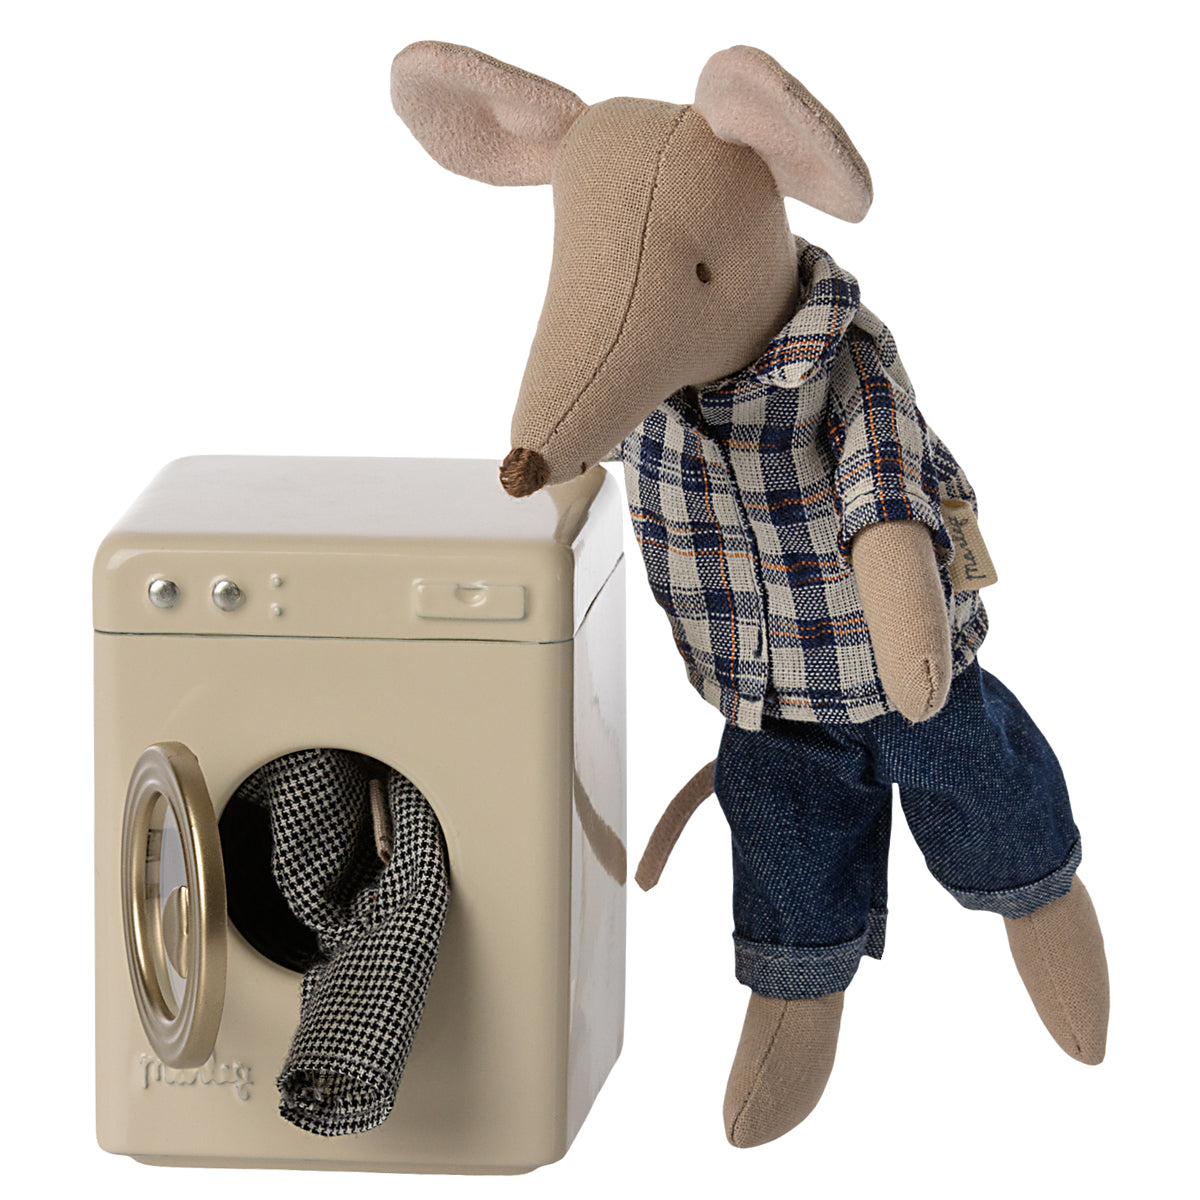 Maileg Washing Machine Mouse 11-3115-00